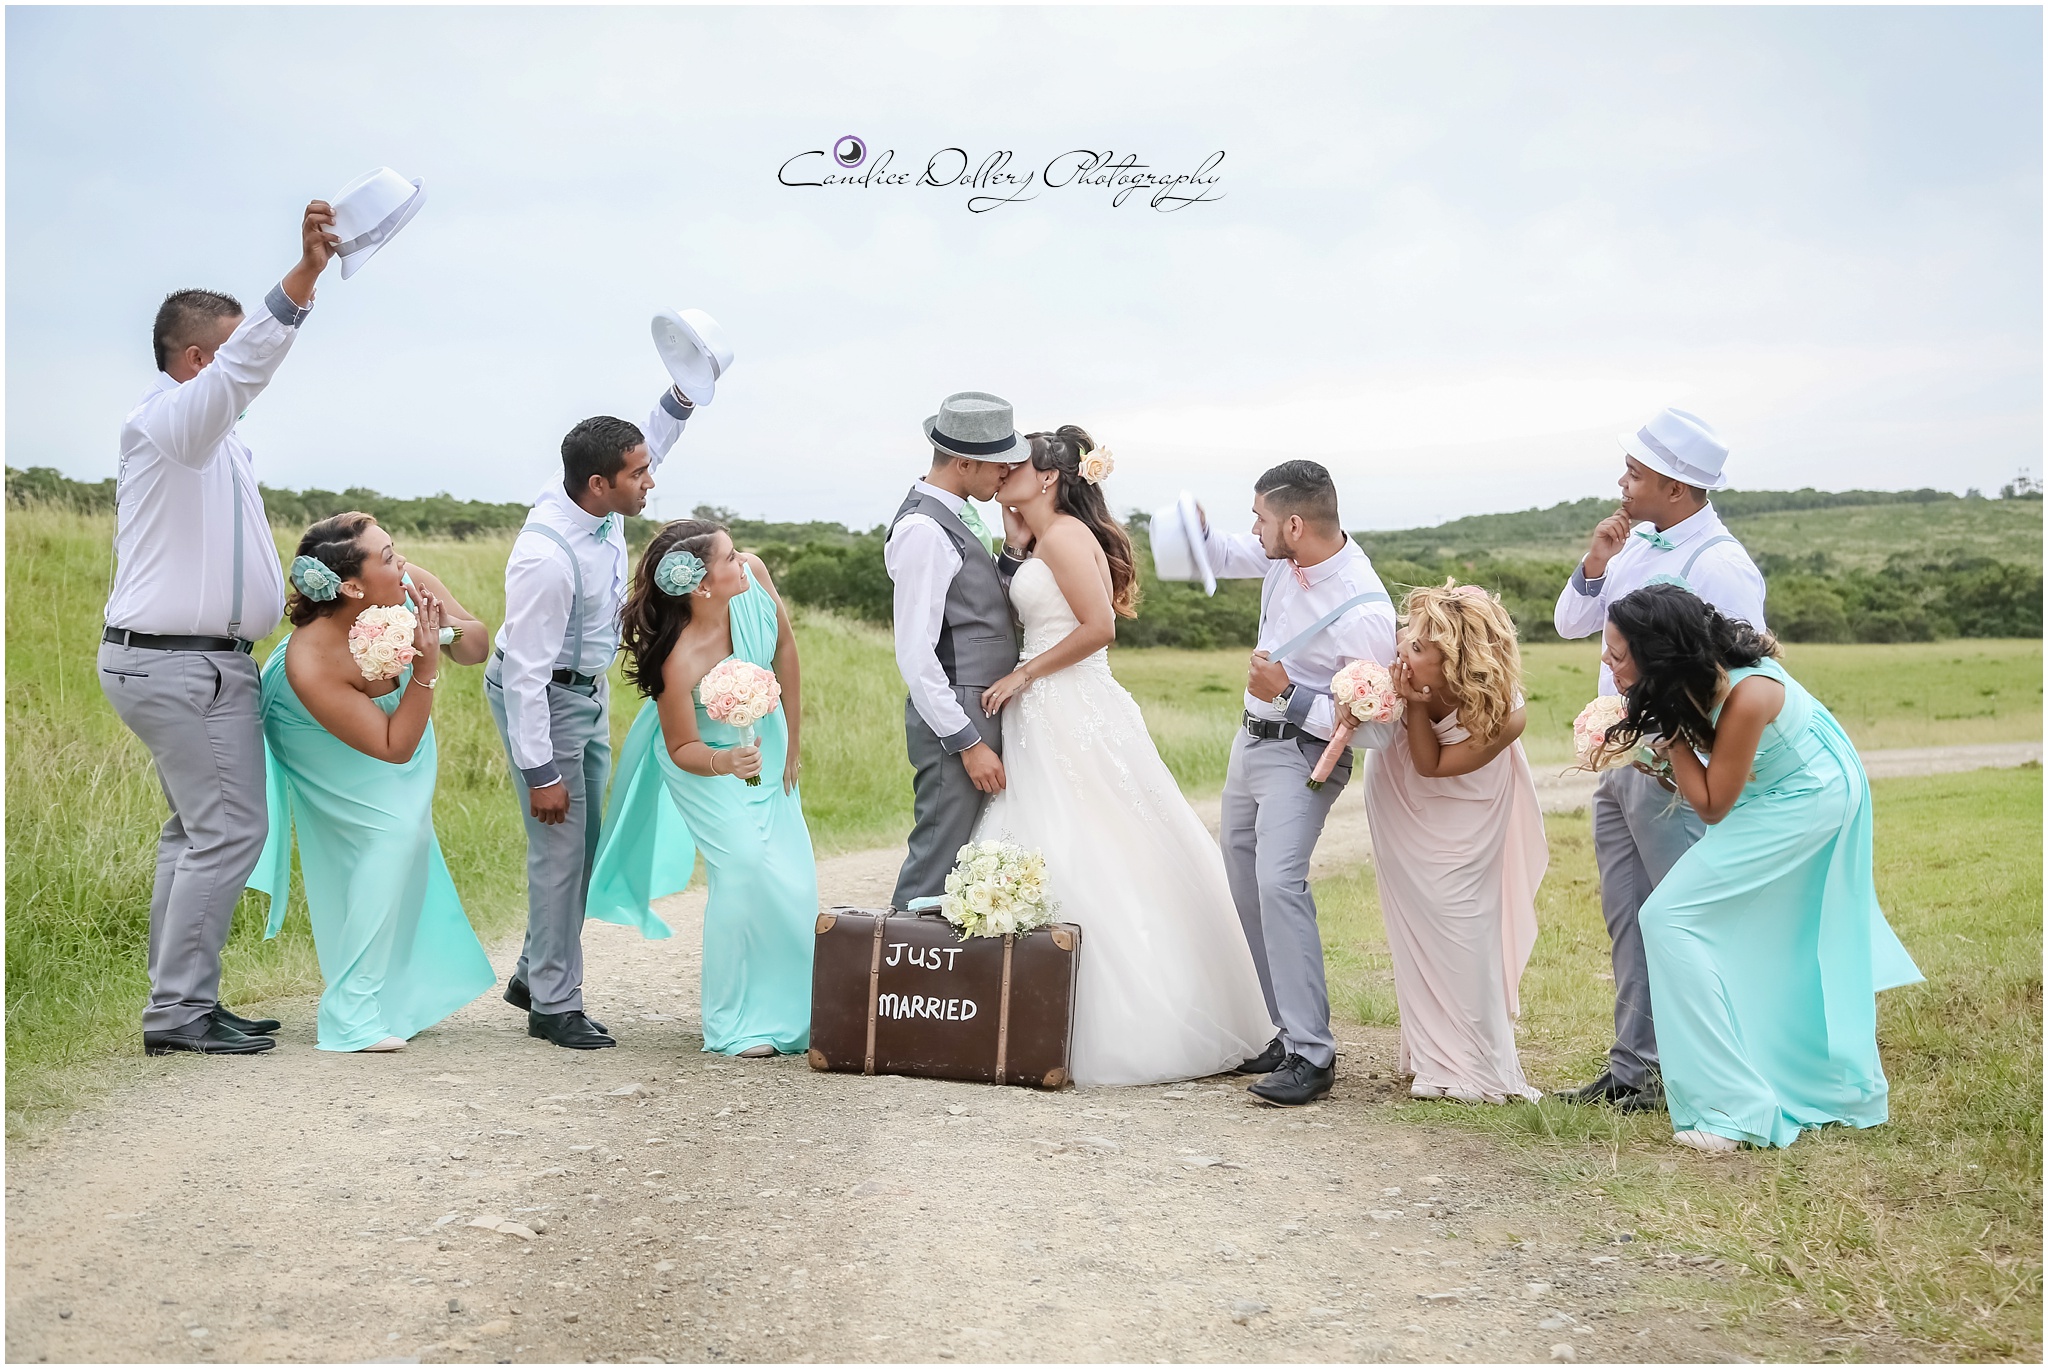 Paula & Jaycee's Wedding - Cypress Dale - Candice Dollery Photography_3075